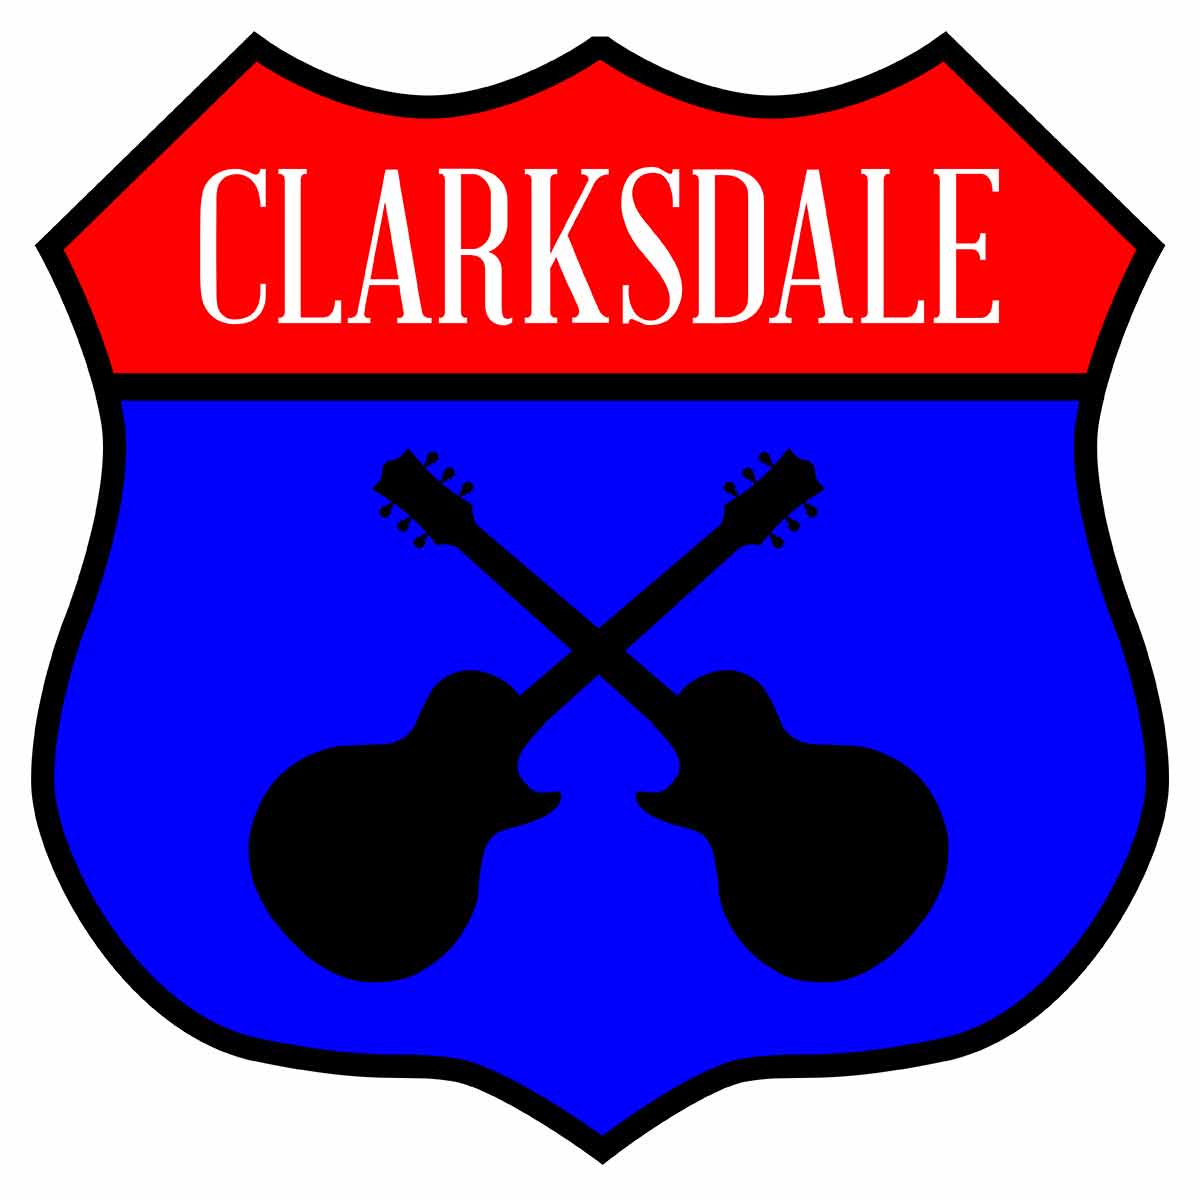 Clarkesdale Mississippi Crossroads Guitar